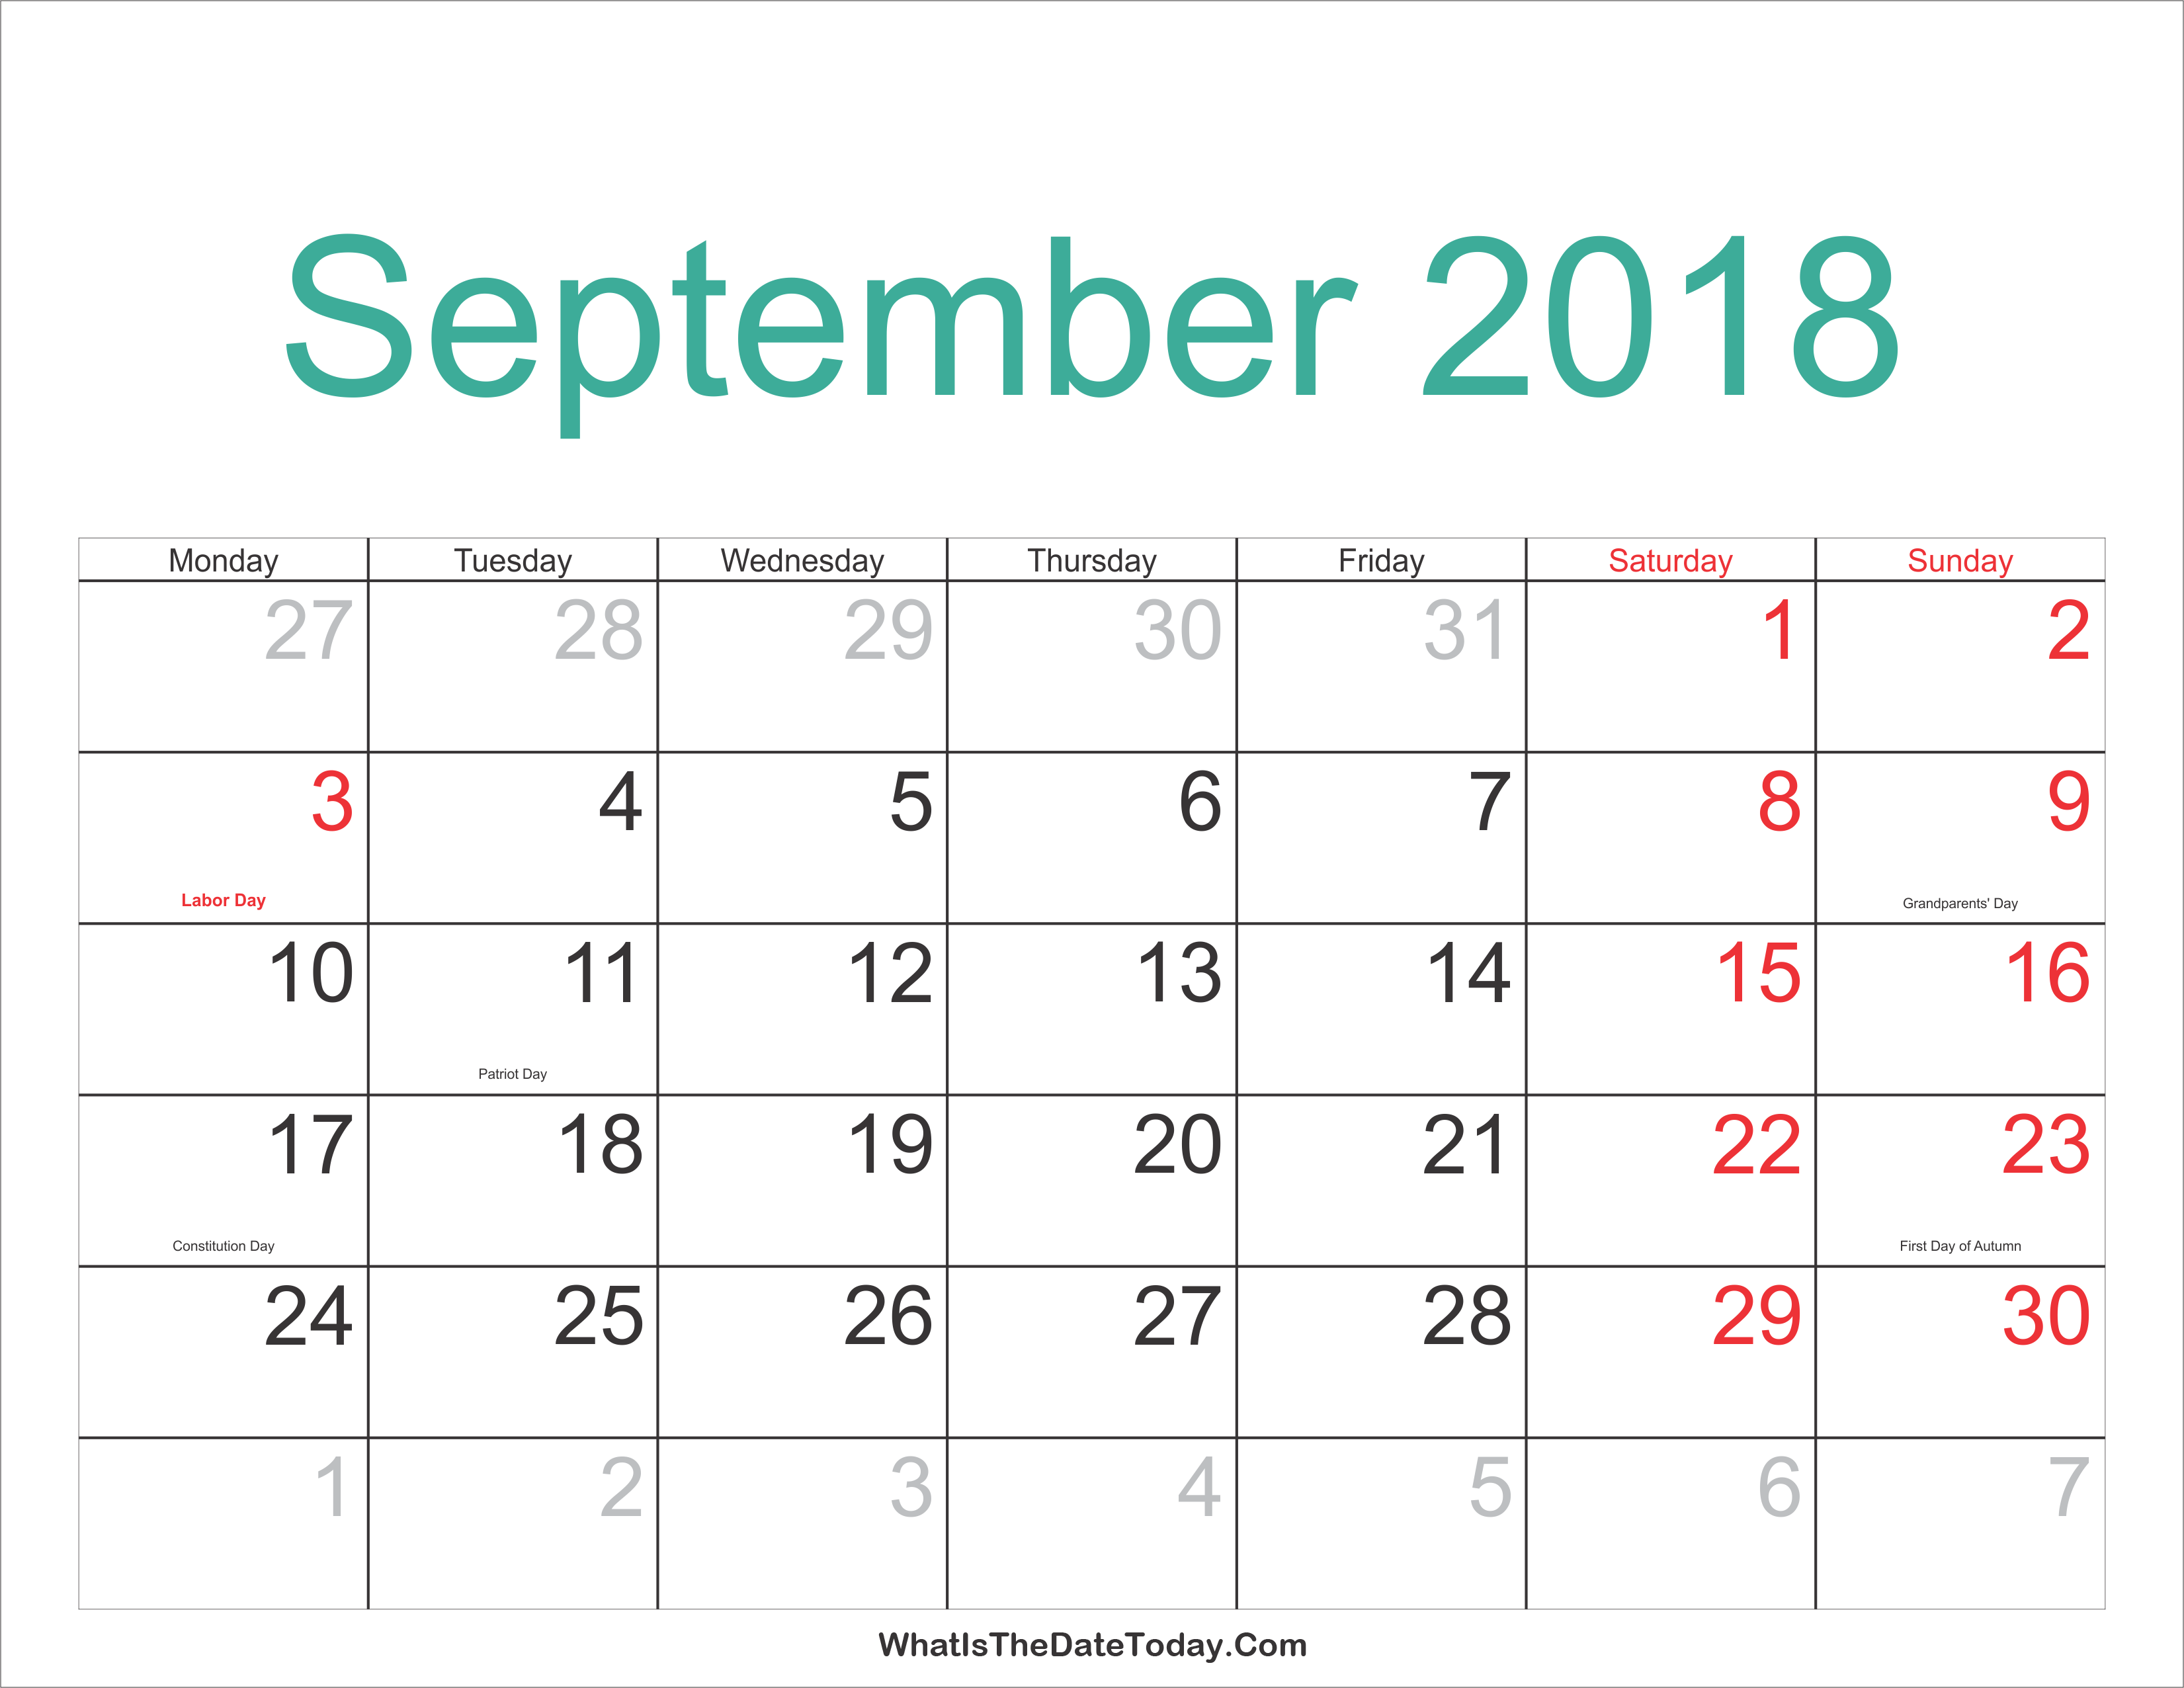 September 2018 Calendar With Holidays Printable September 2018 Calendar With Holidays Pzsbks